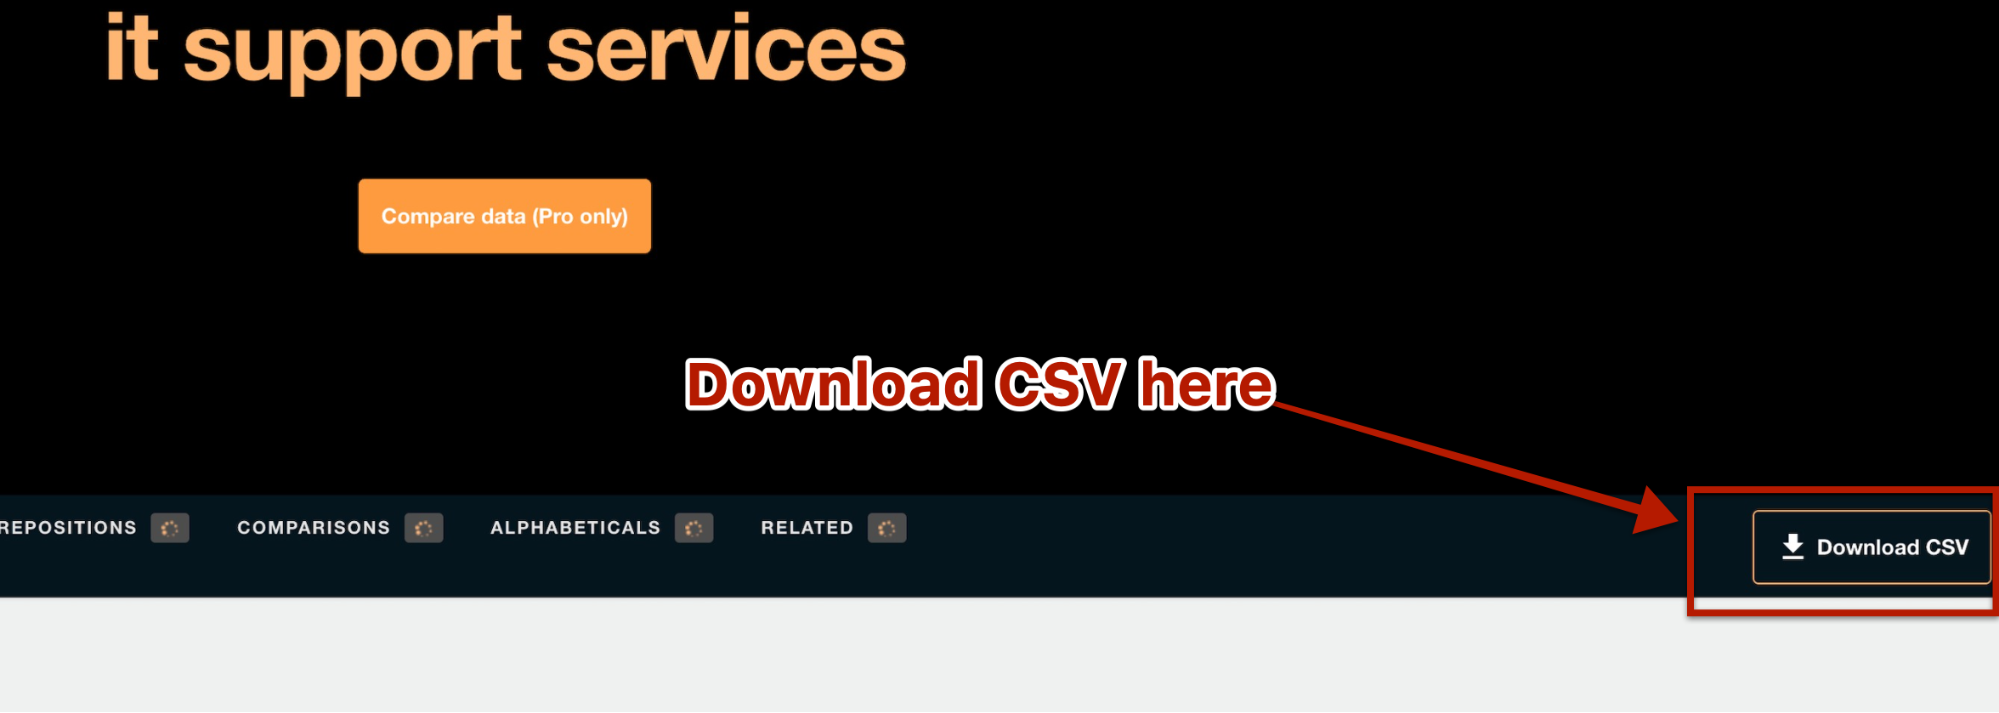 How to download CSV on answerthepublic